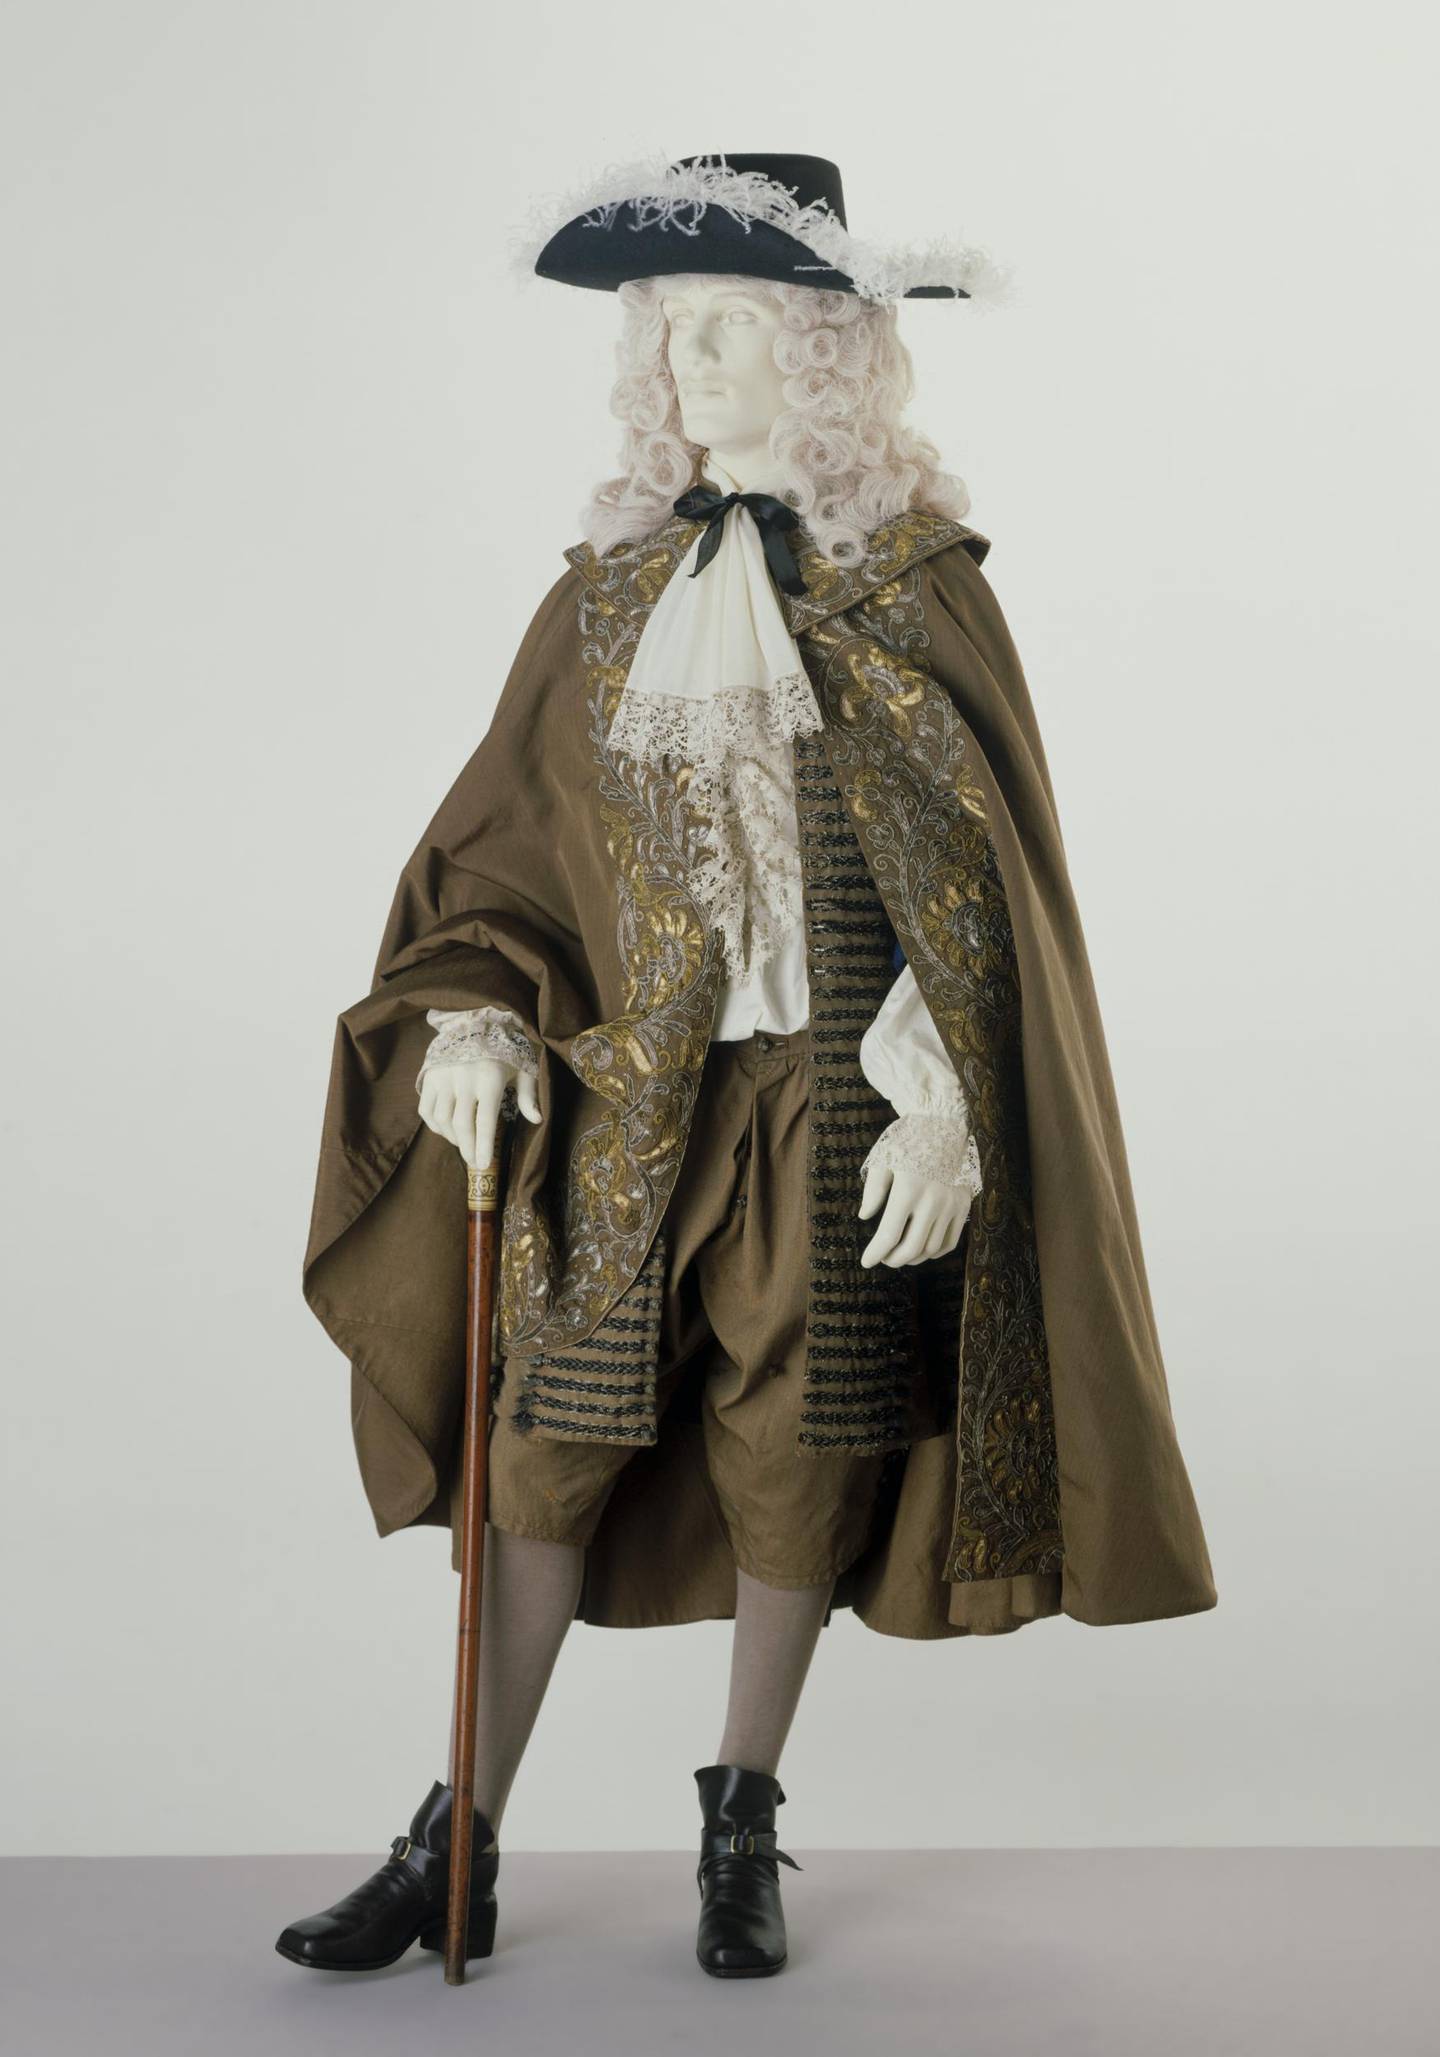 Men's dress circa 1780. Courtesy Victoria and Albert Museum